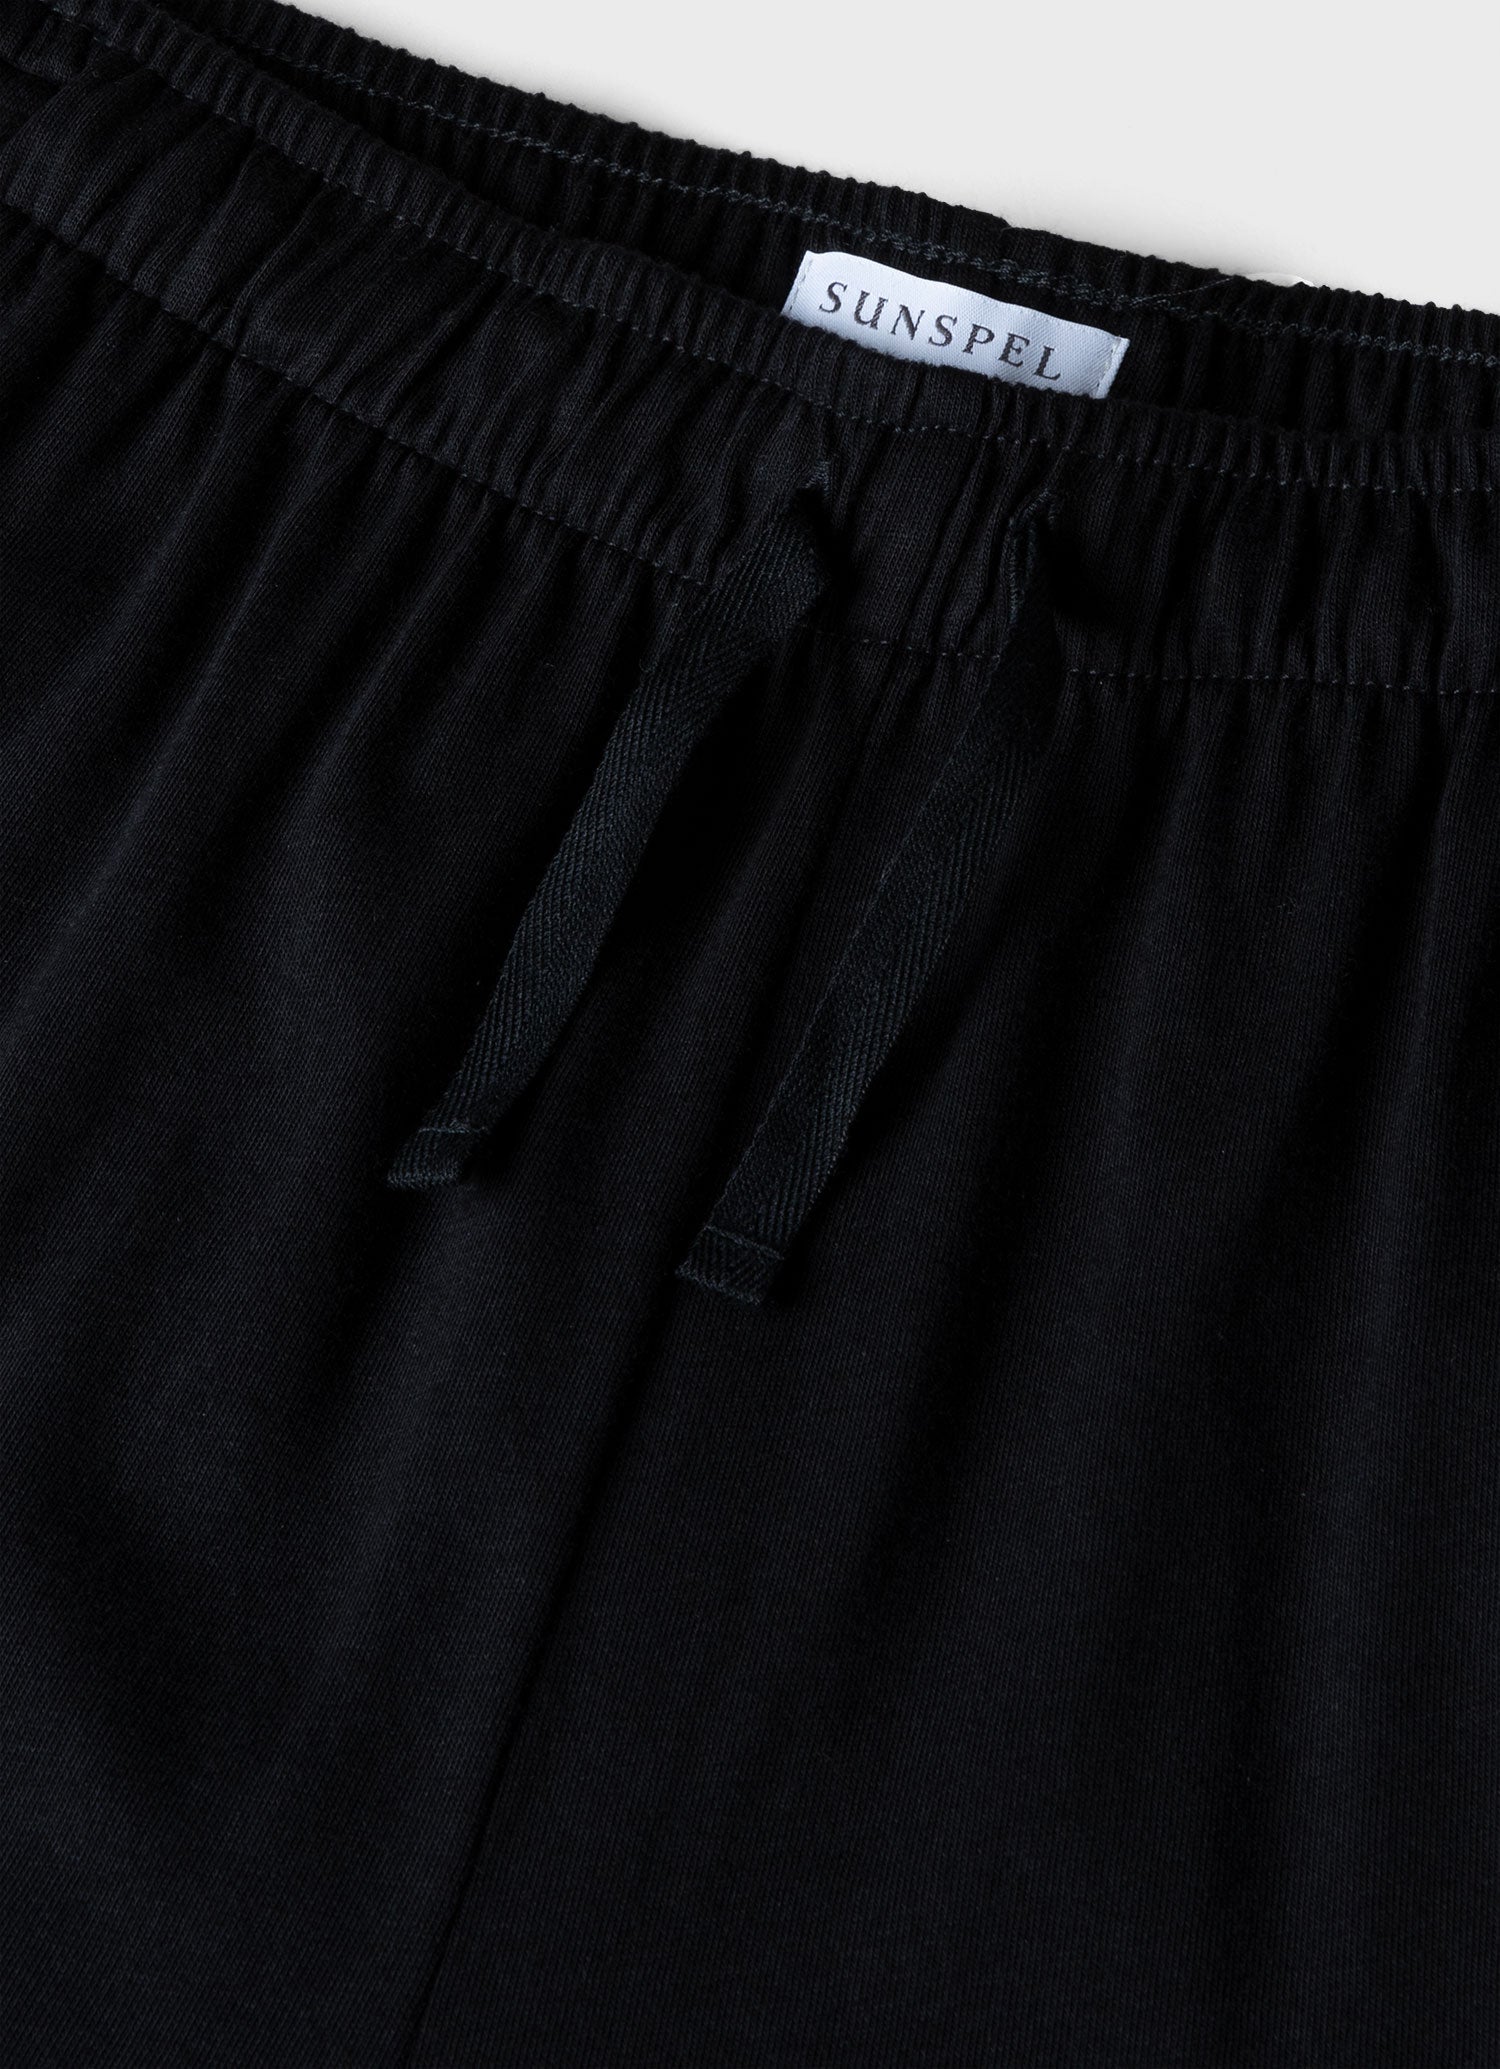 Men's Cotton Modal Lounge Pant in Black